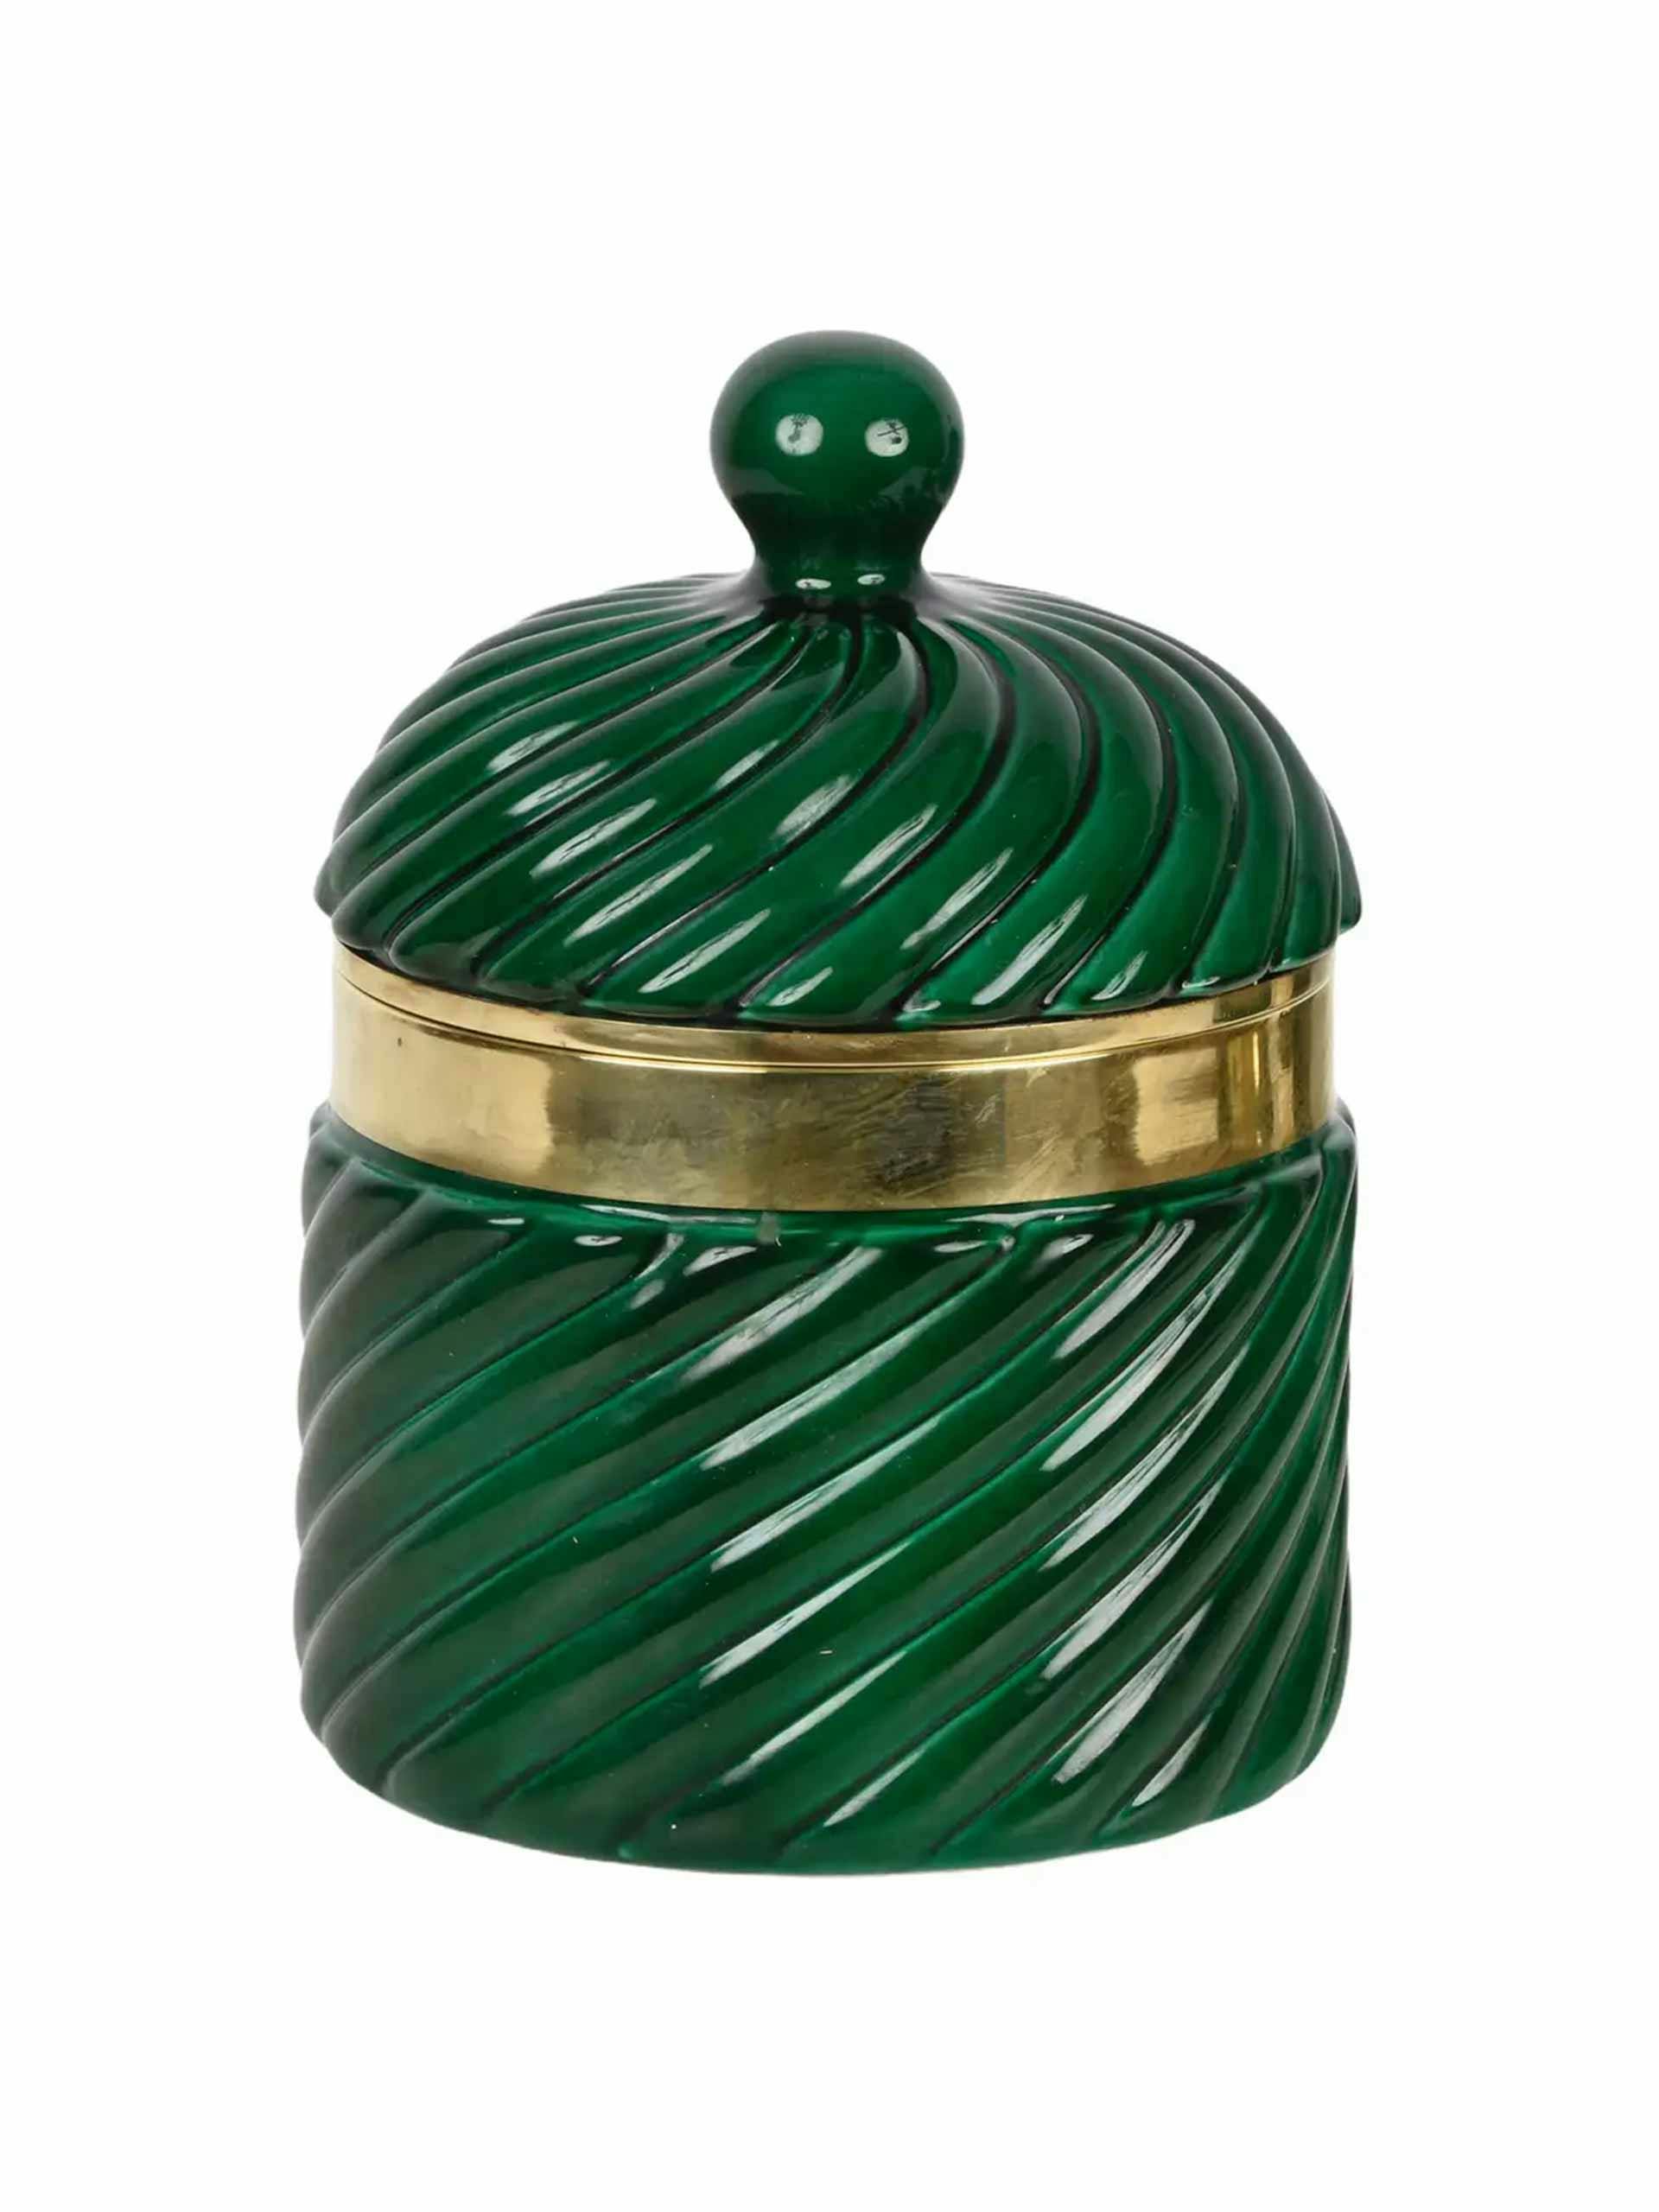 Ceramic and brass Italian ice bucket